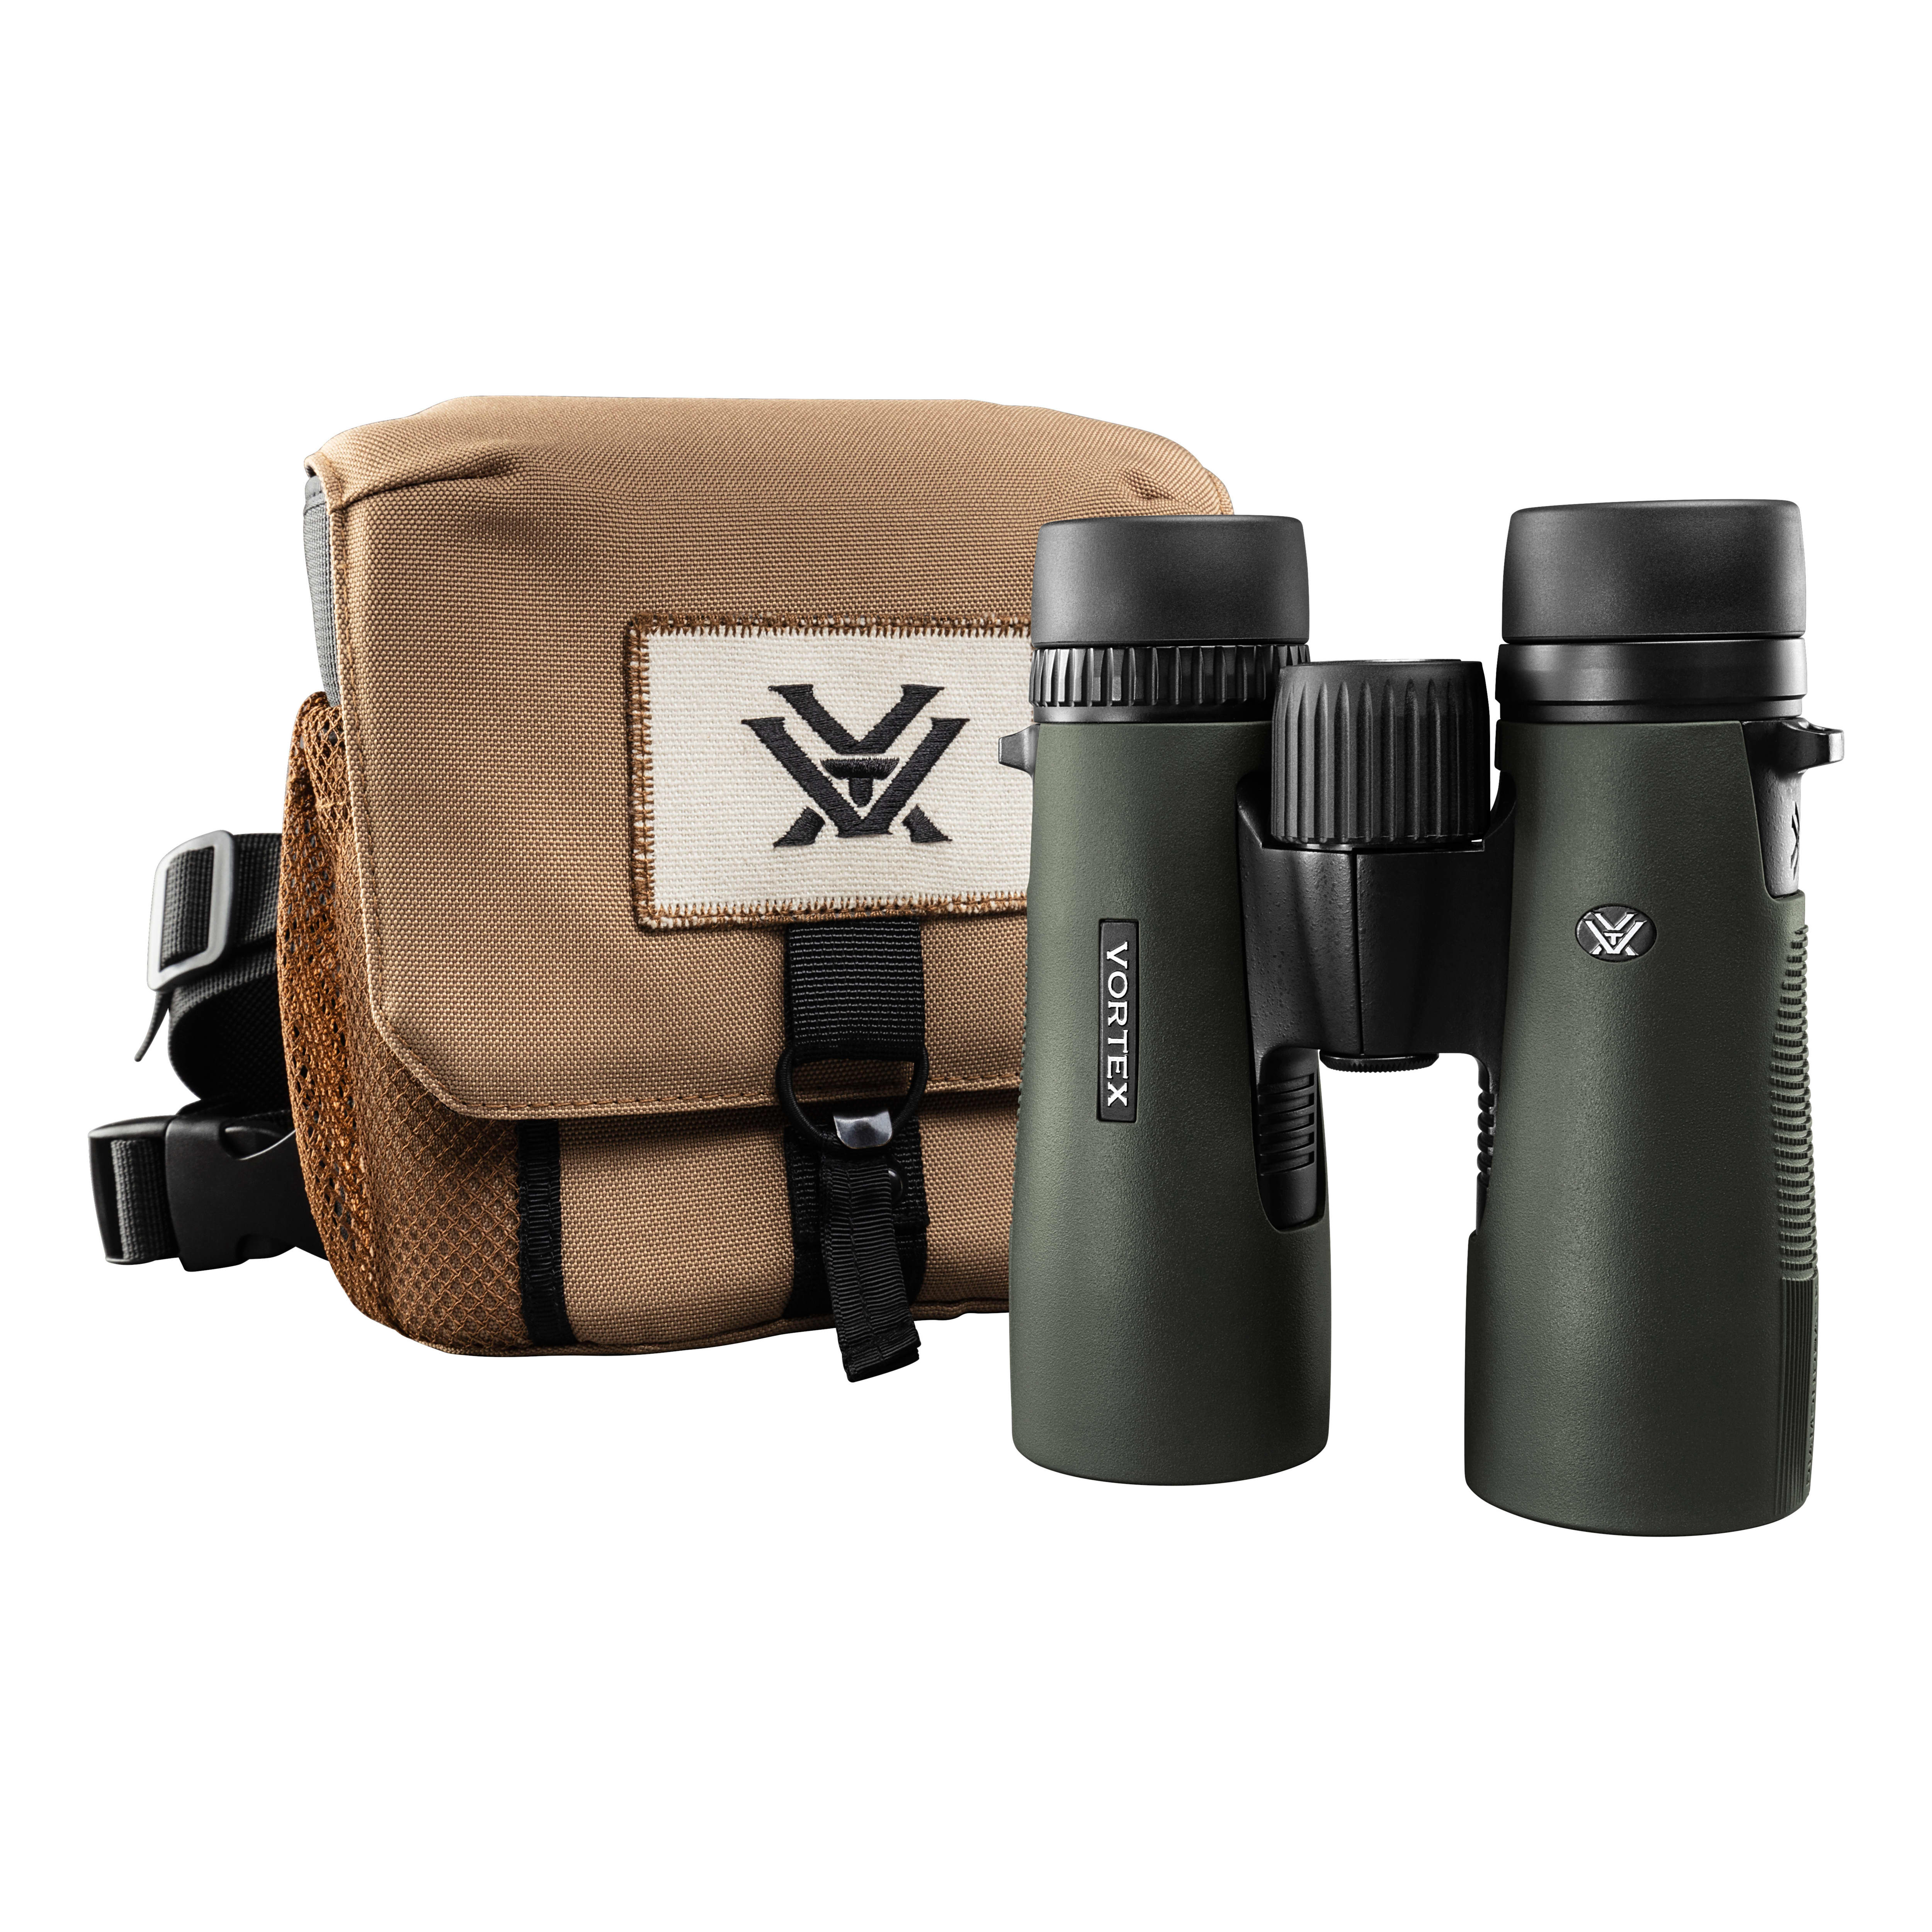 Vortex® Diamondback® Binoculars - With GlassPak View